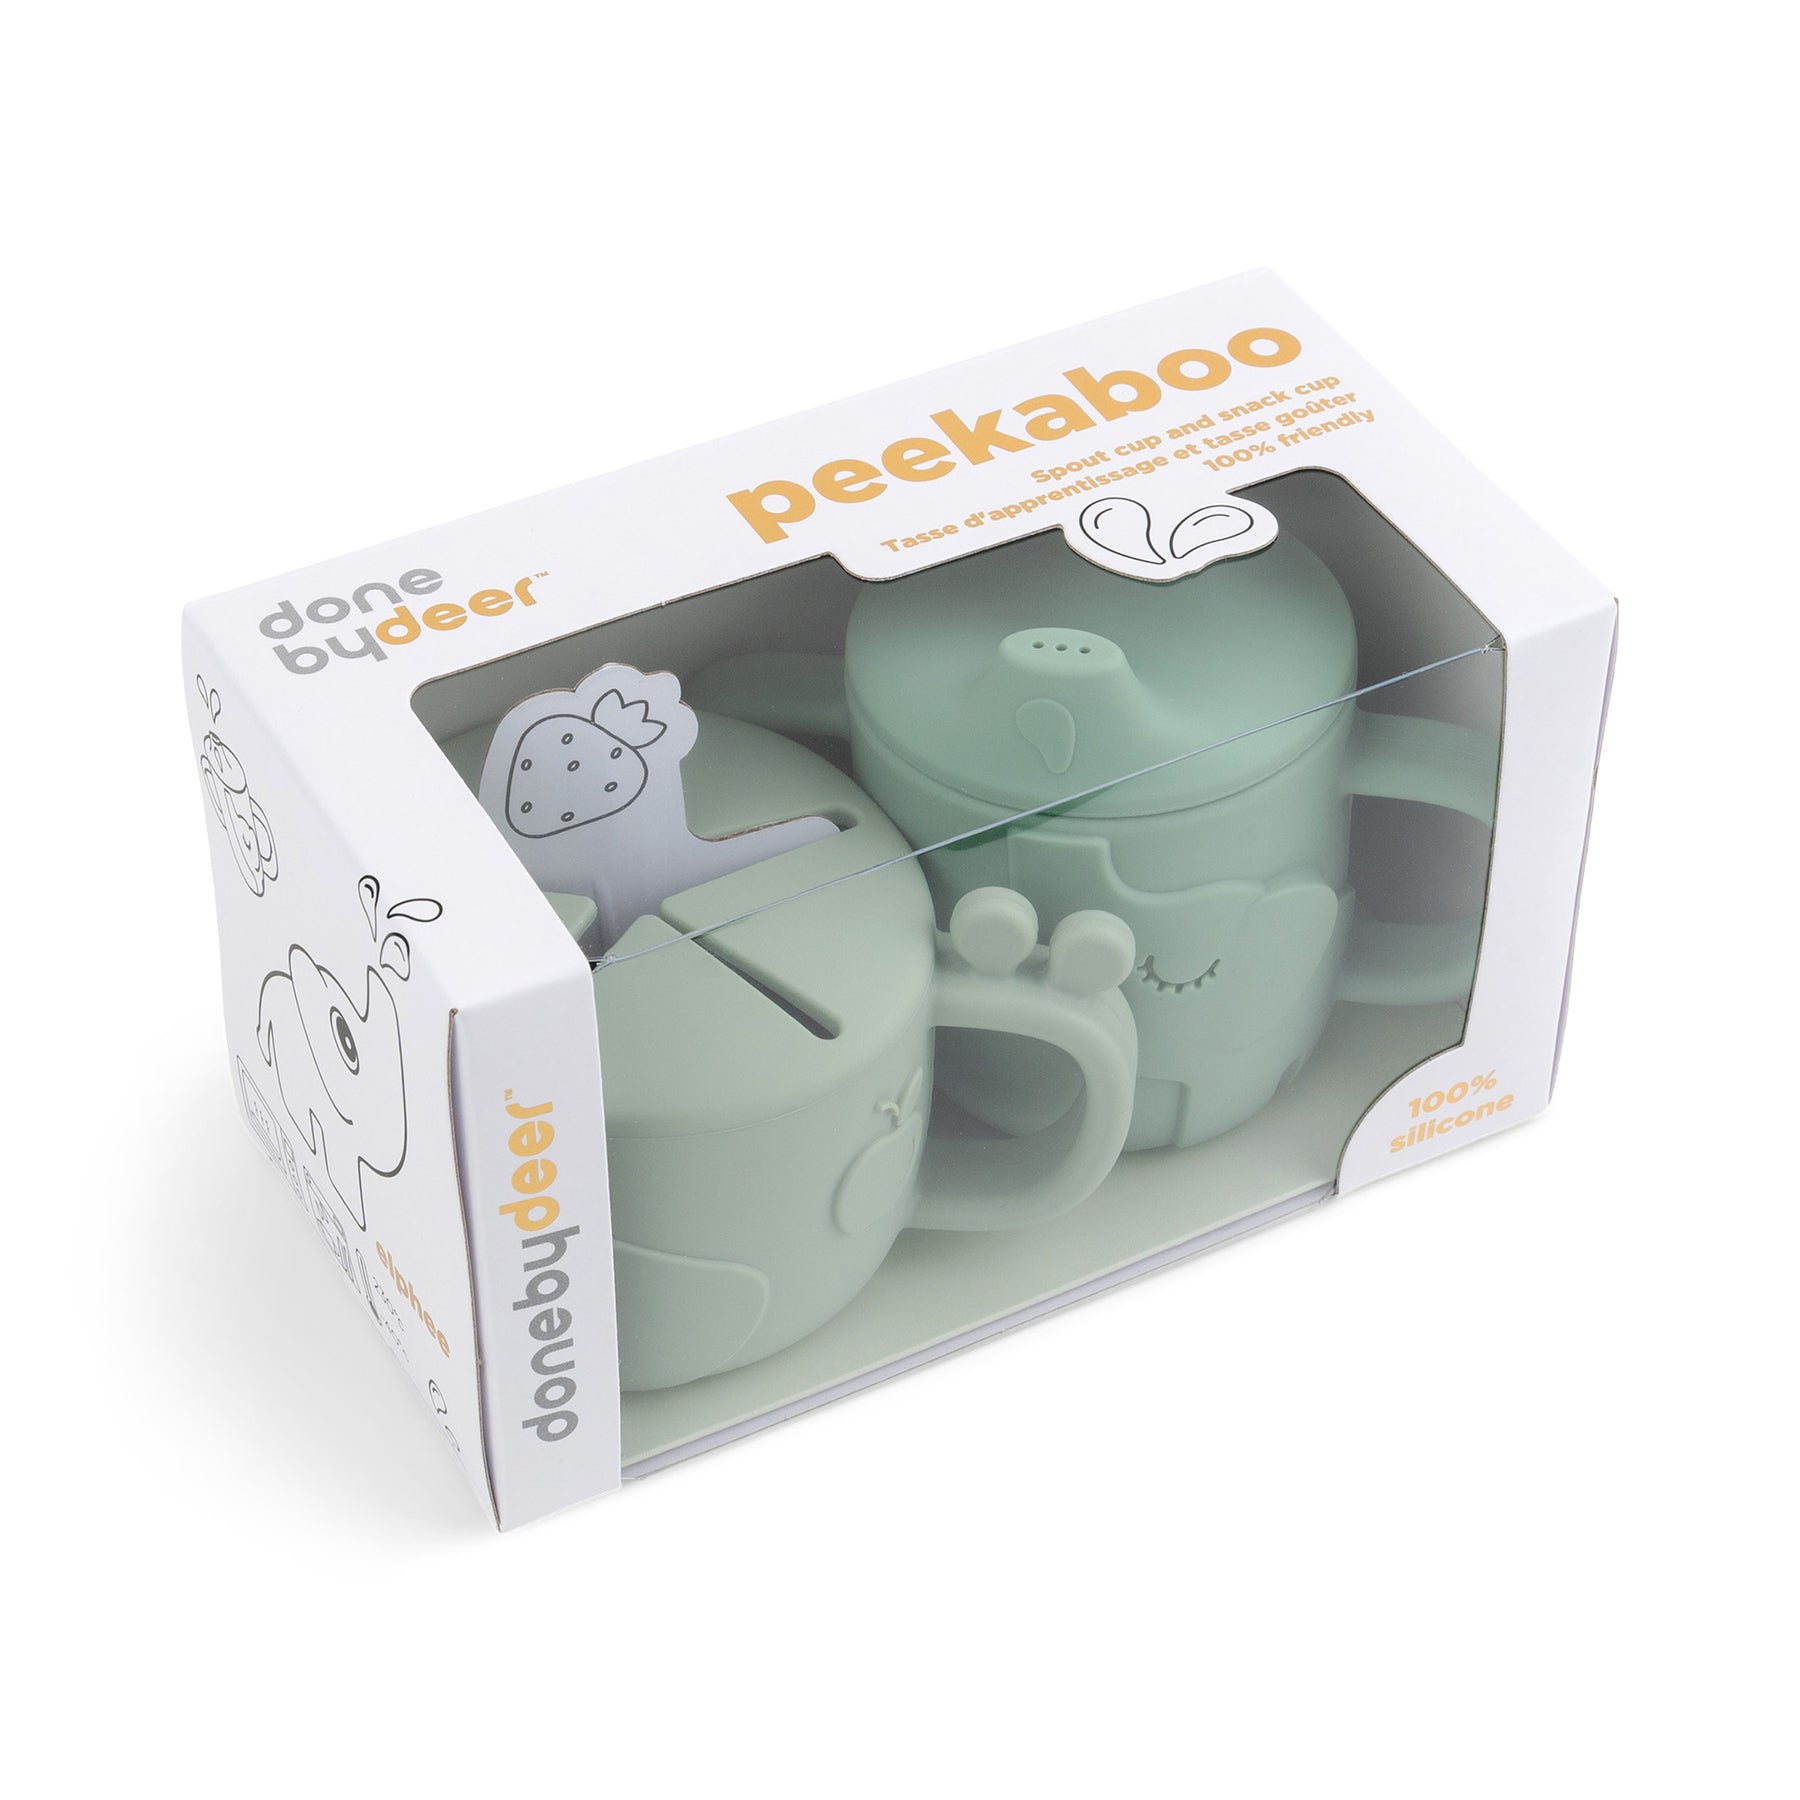 Peekaboo spout/snack cup set - Deer friends - Green - Packaging